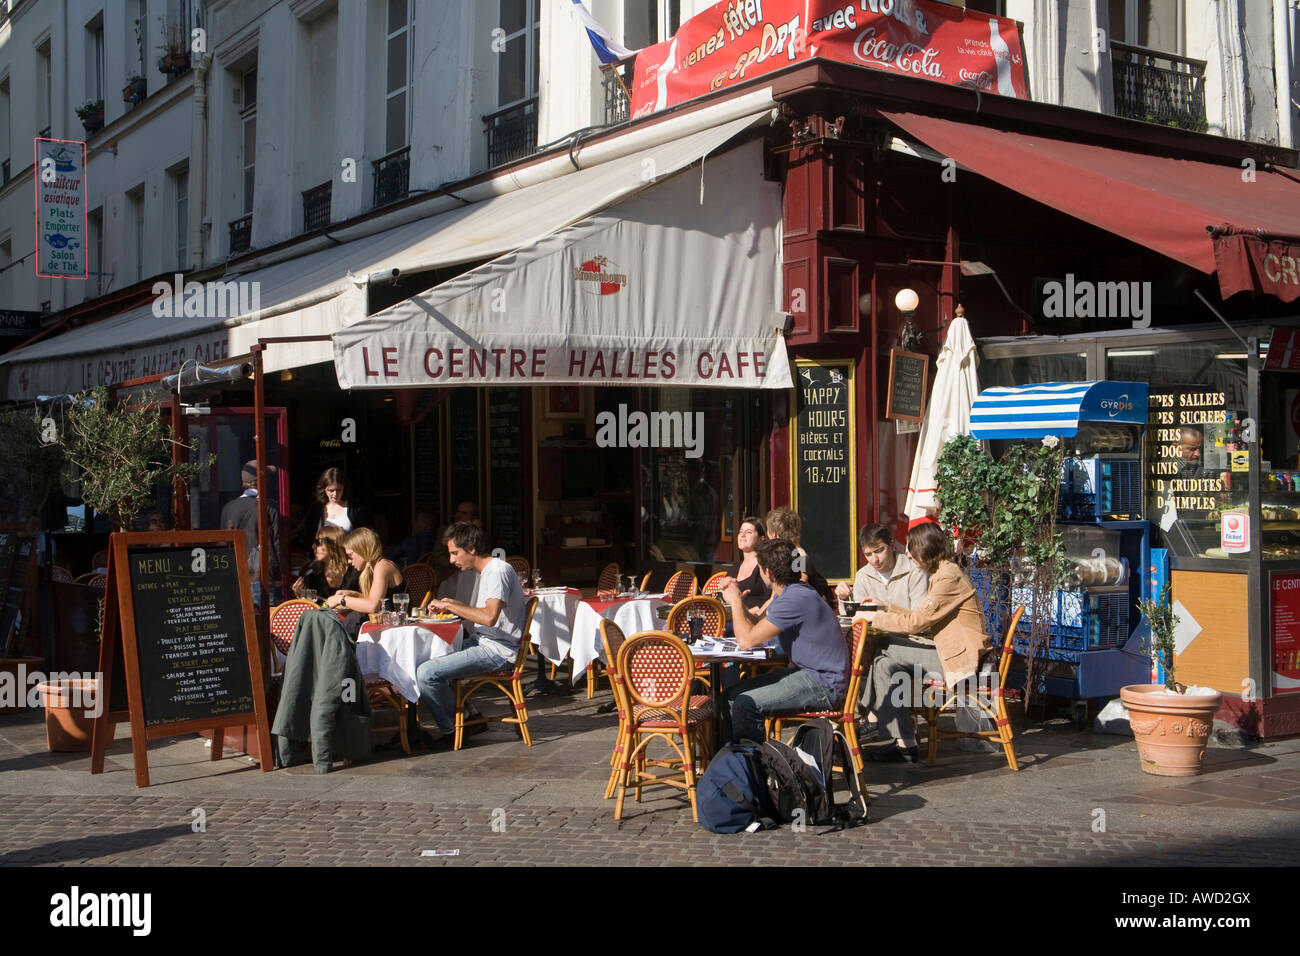  Sidewalk  cafe  in the 1 Arrondissement Paris  France  